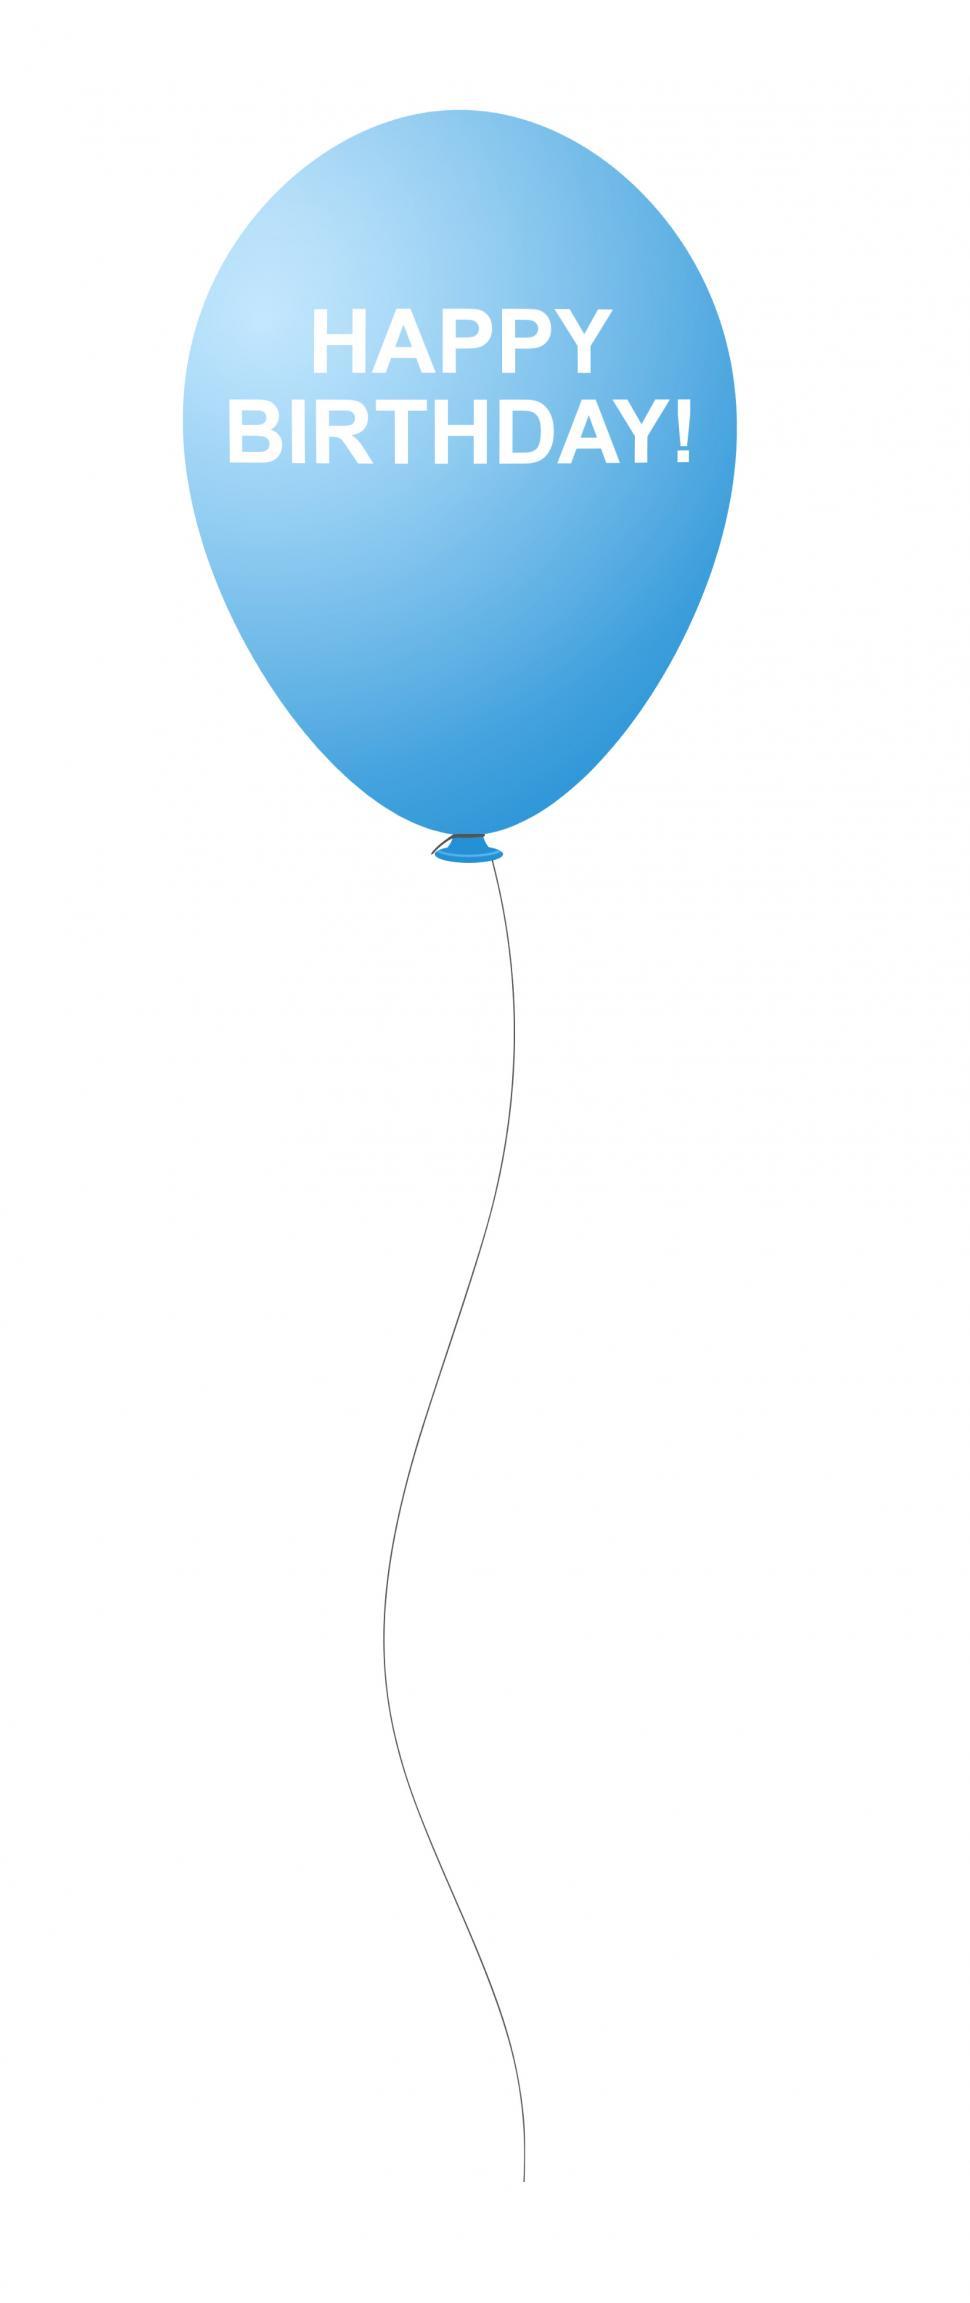 Free Image of Blue Happy Birthday Balloon   